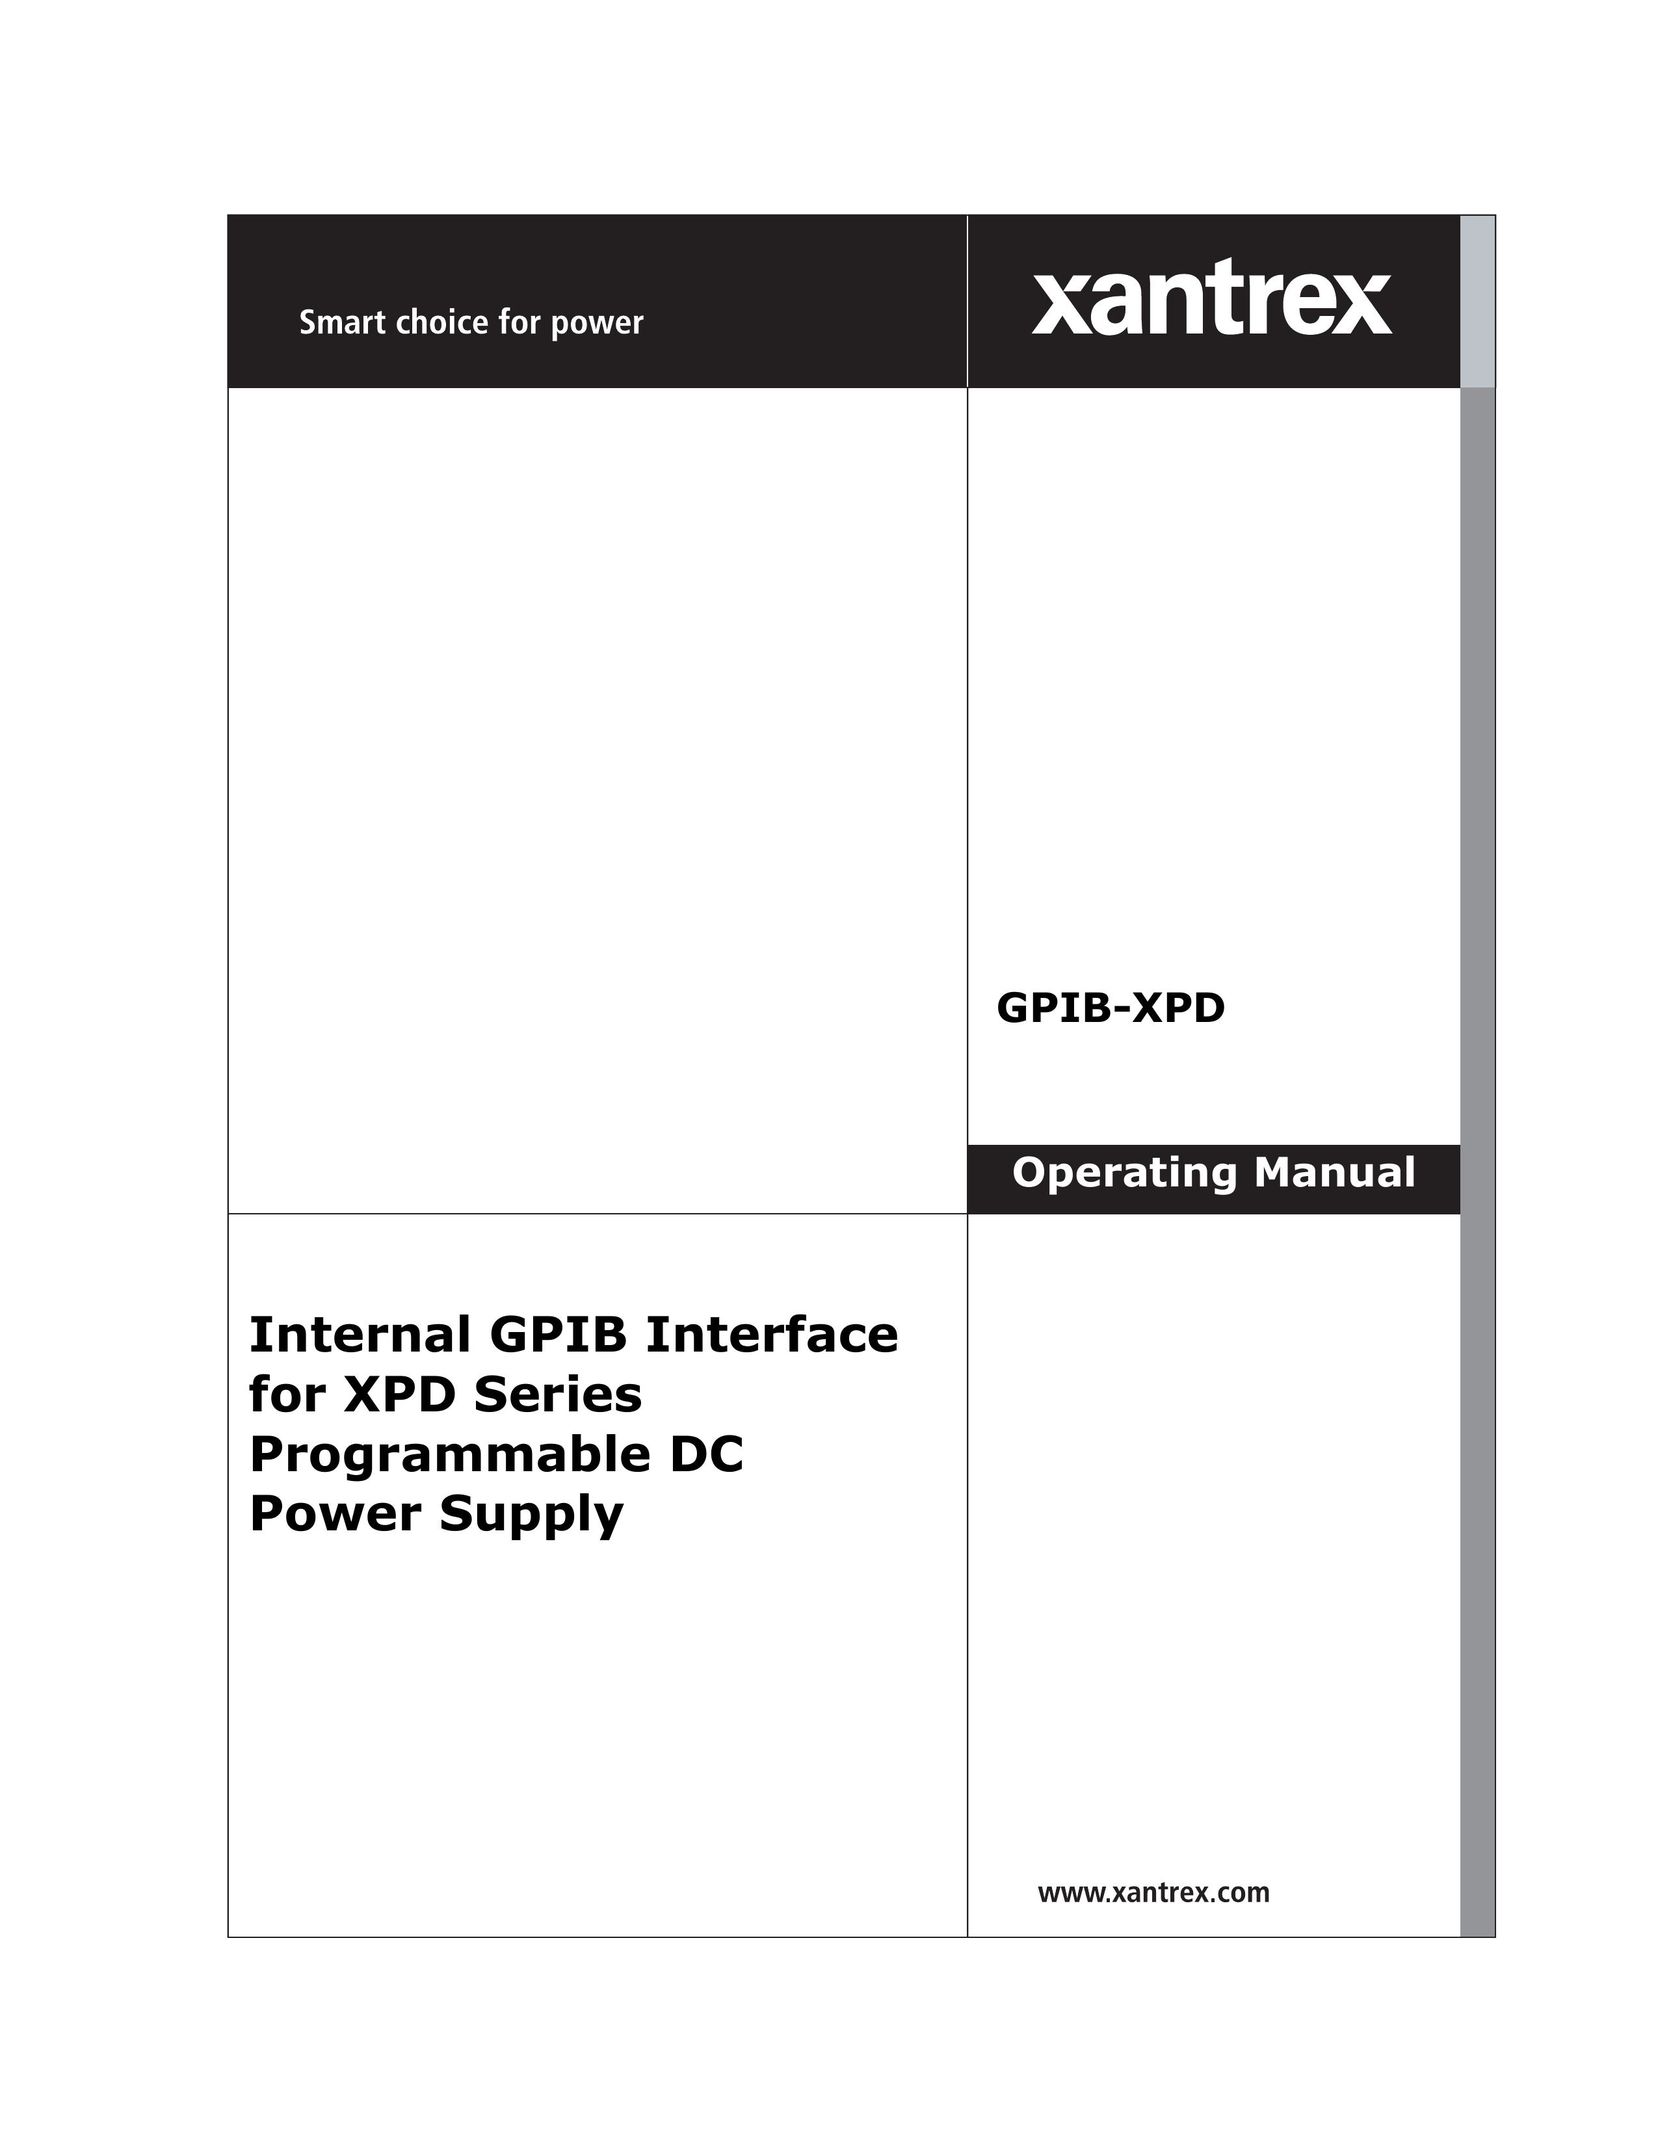 Xantrex Technology GPIB-XPD Power Supply User Manual